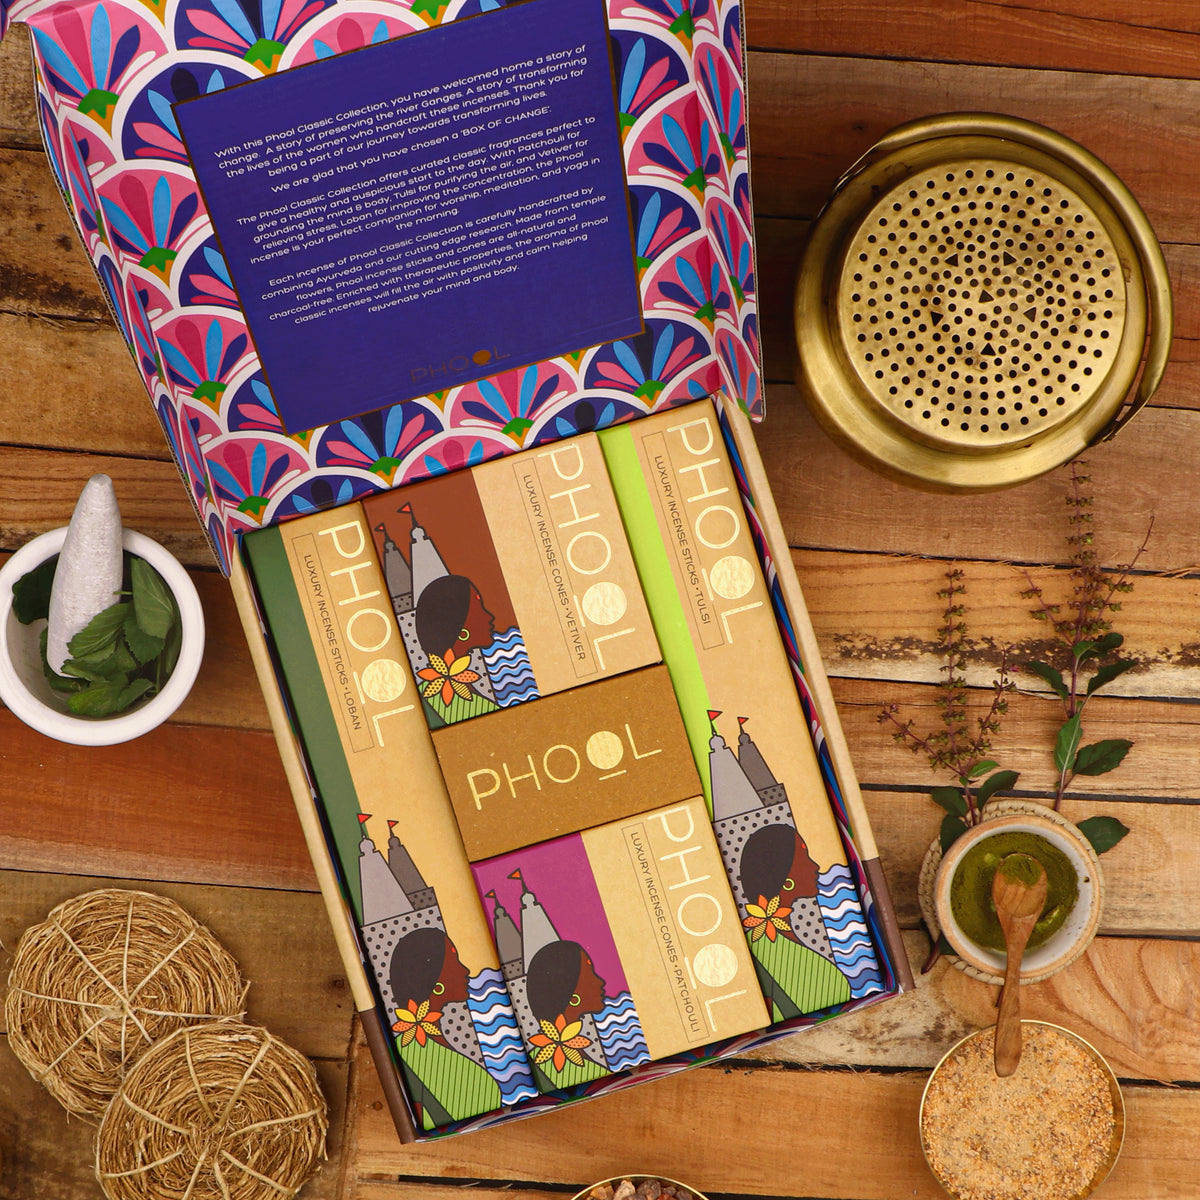 Paleva Jali Diwali Gift Box Online | Exquisite Eco-Friendly Delights - Phool  – PHOOL